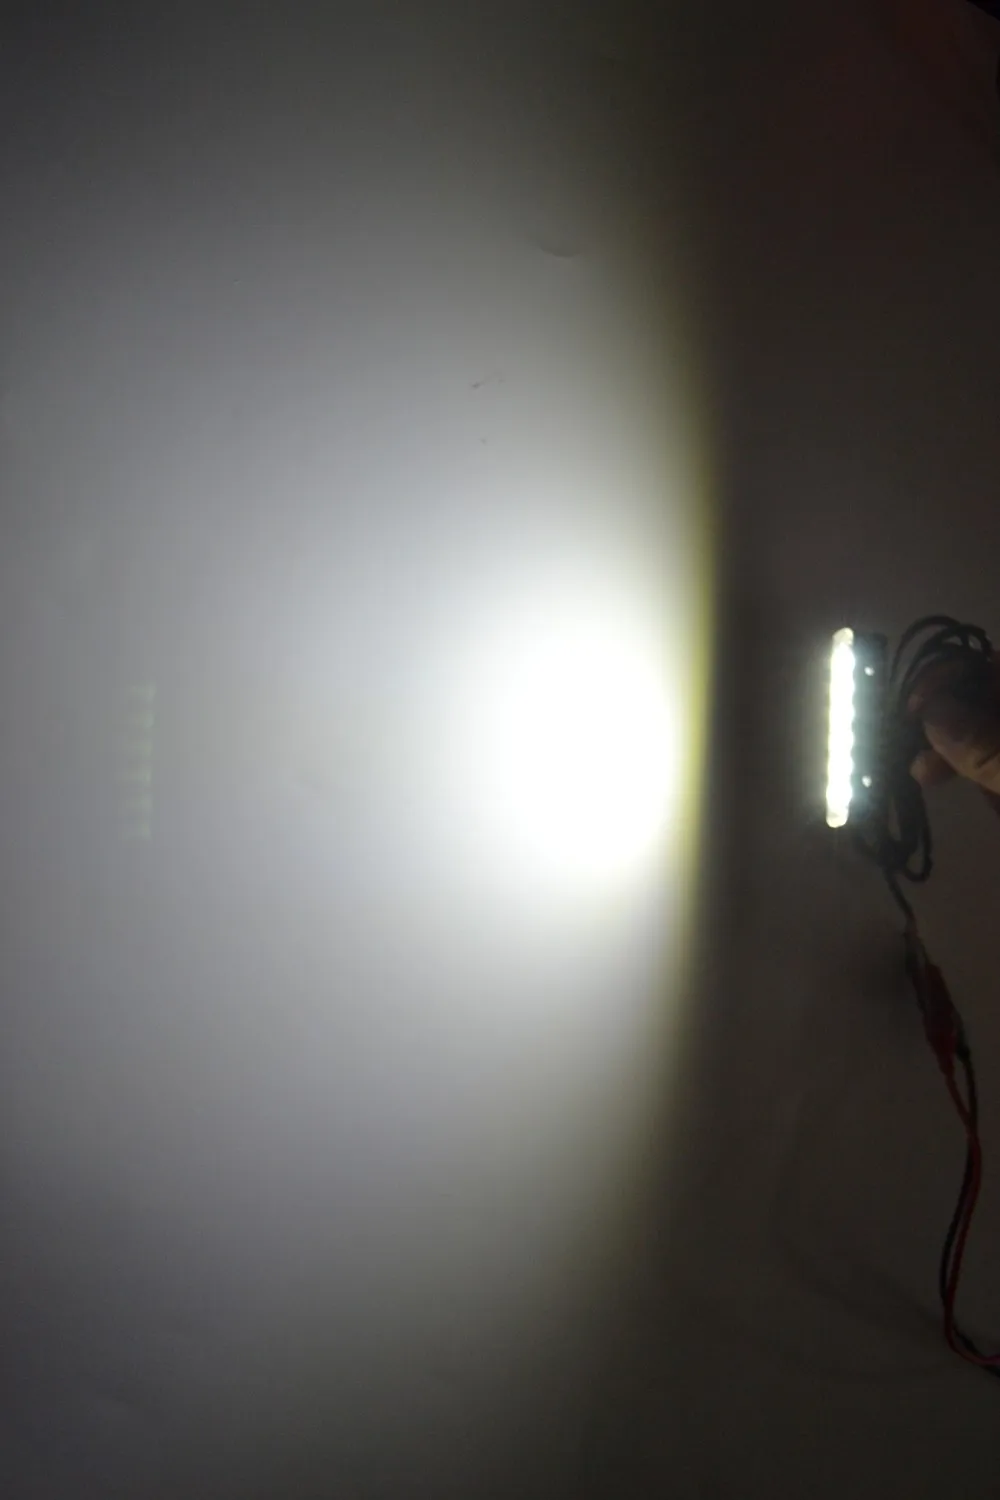 LED Lamp Turns Signal Light